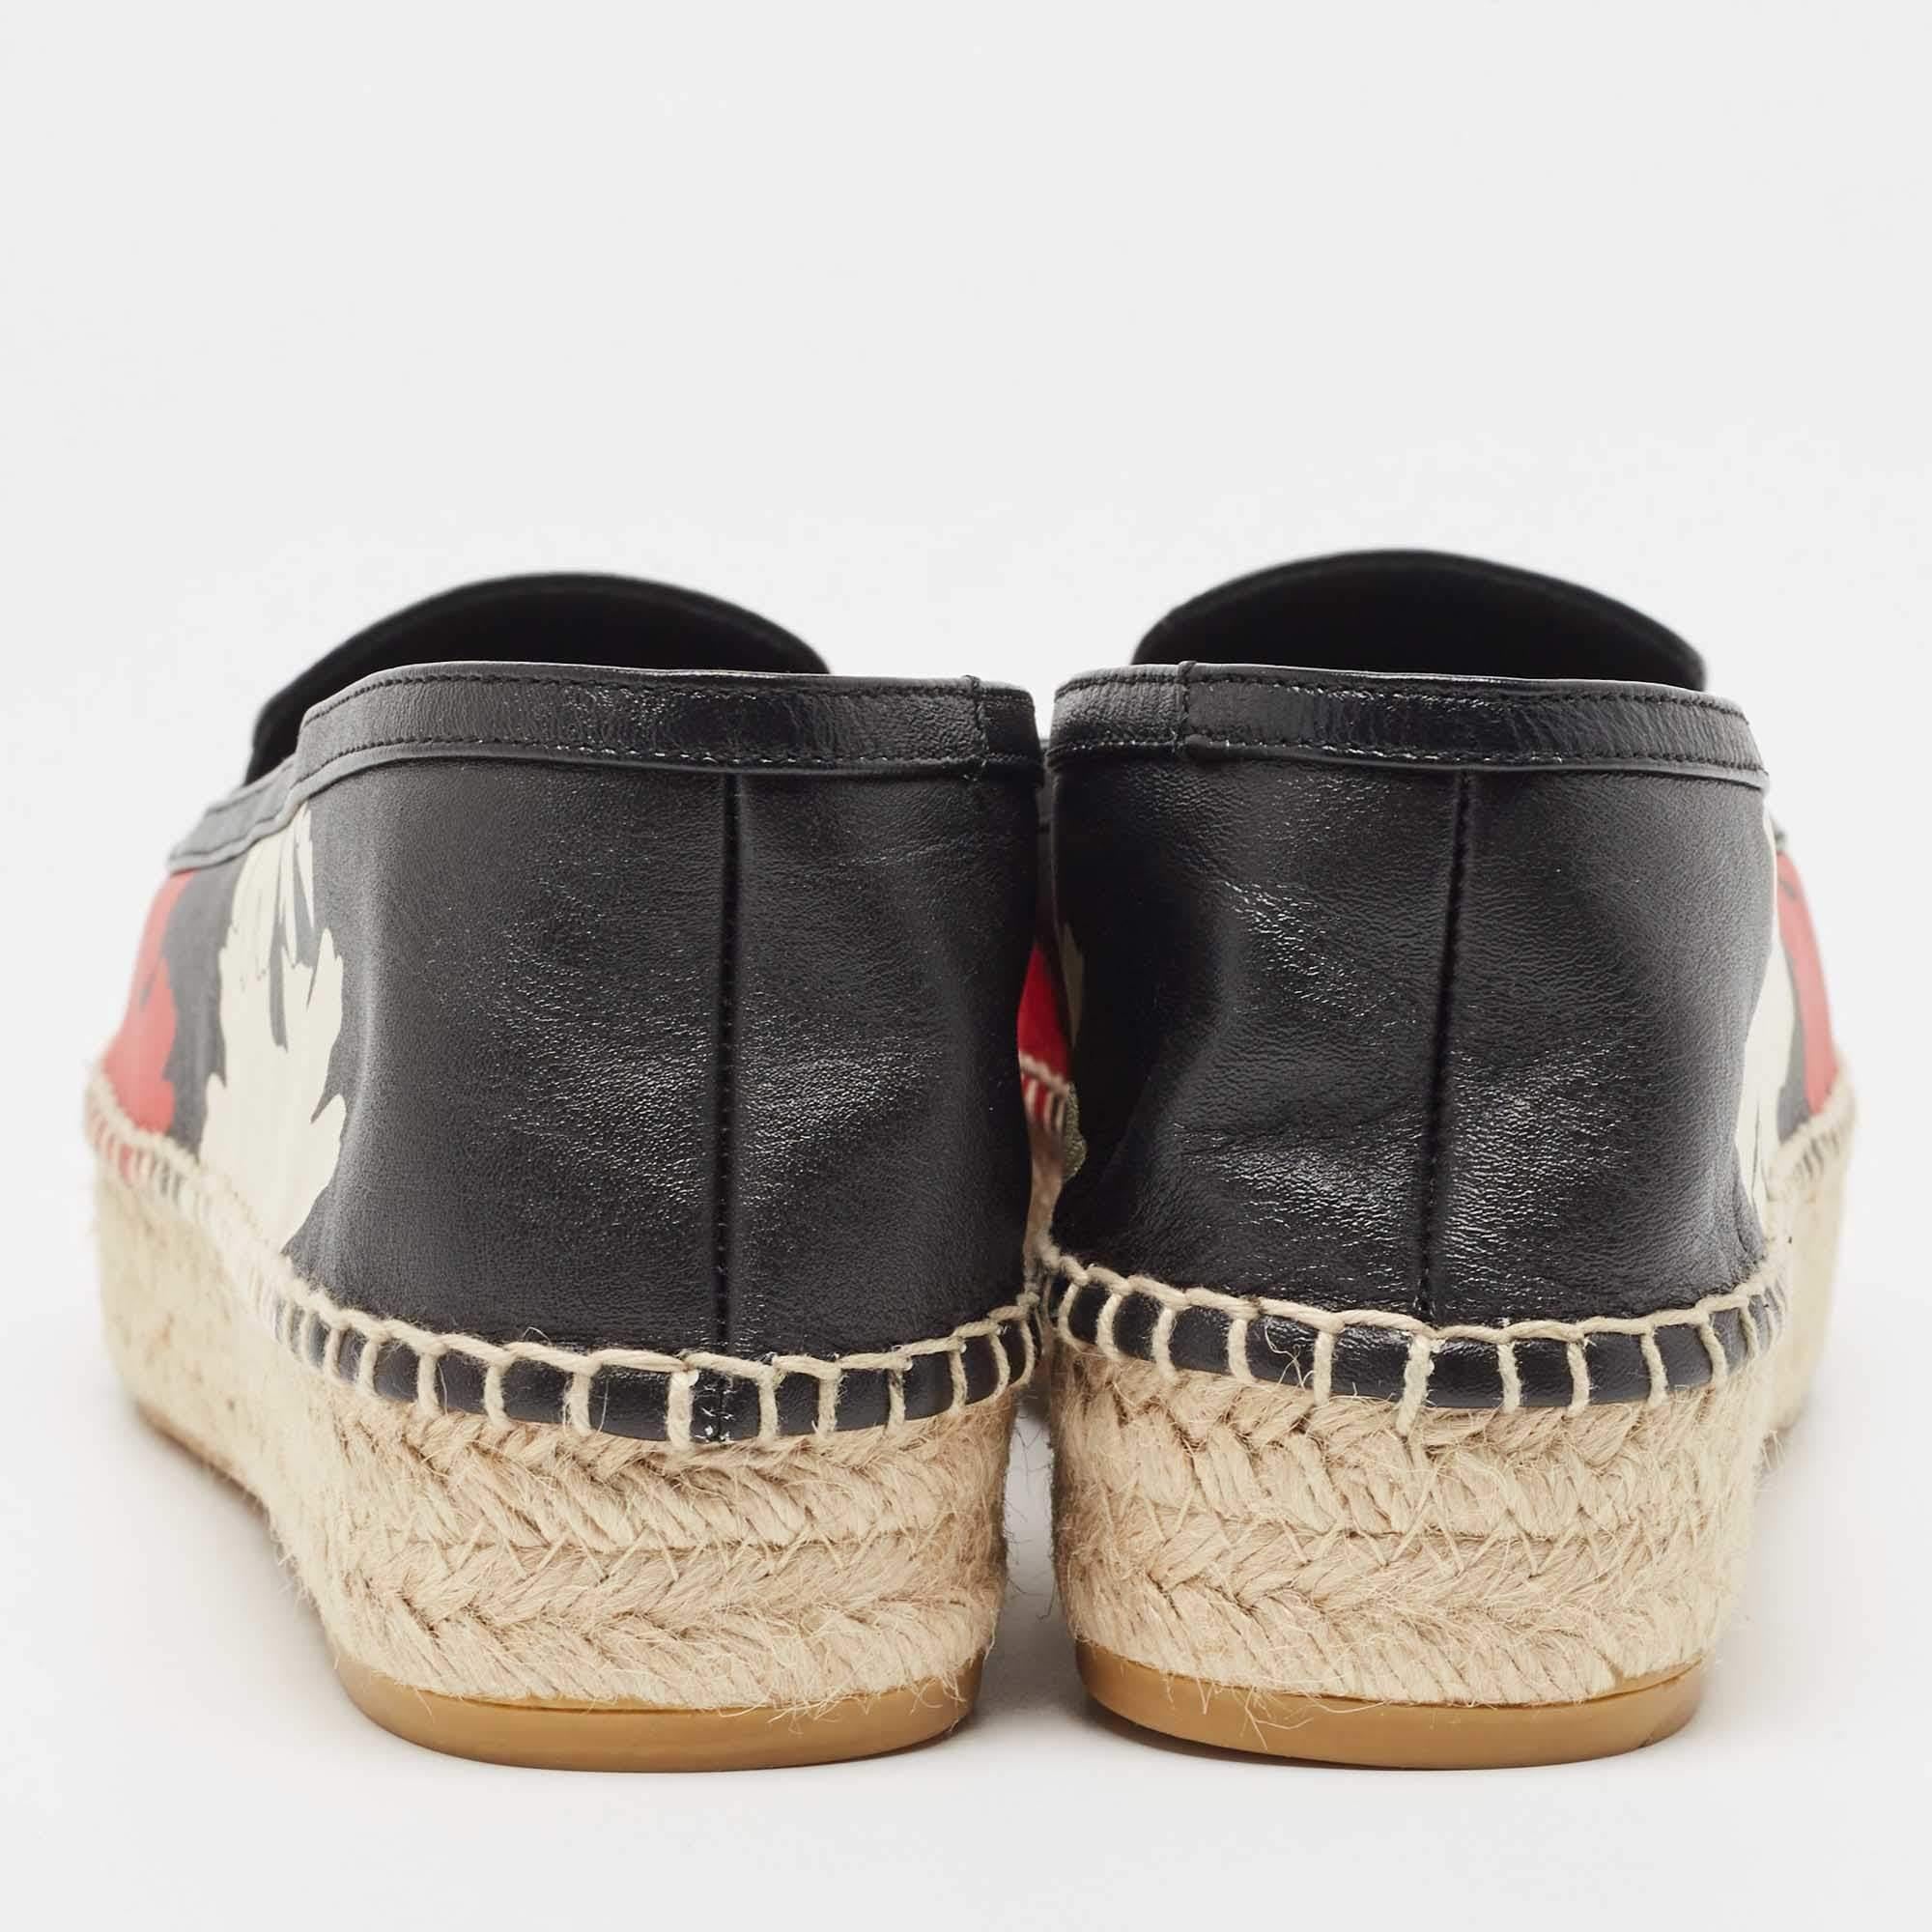 Women's Alexander McQueen Tricolor Leather Espadrille Flats Size 40